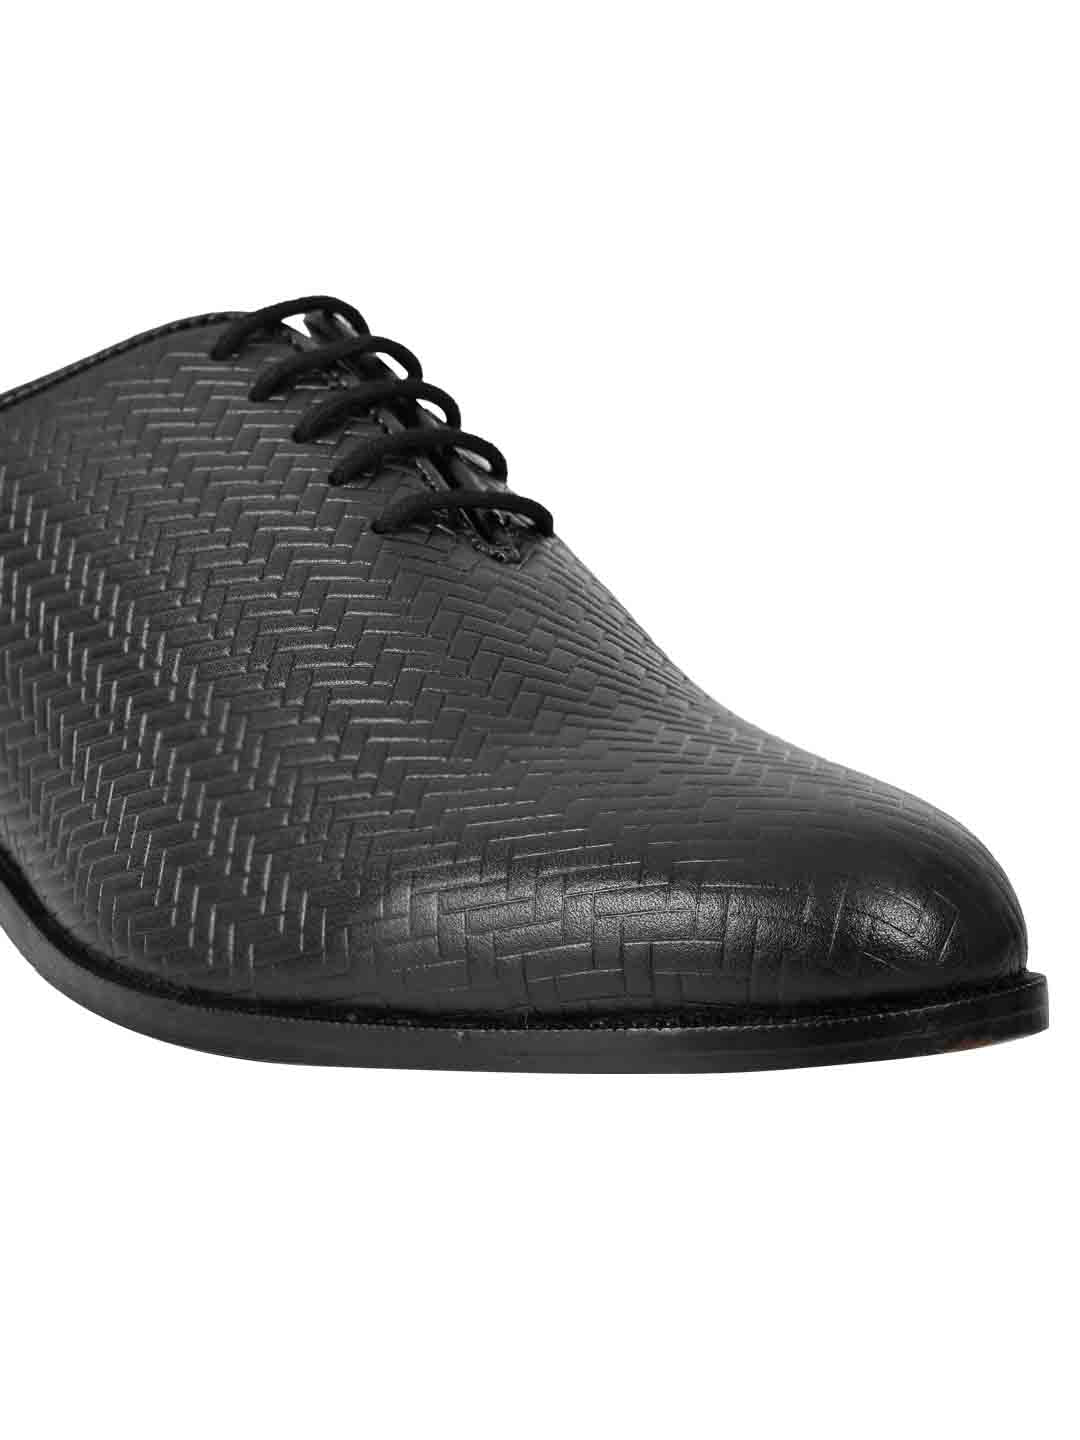 Footwear, Men Footwear, Black Oxford Shoes